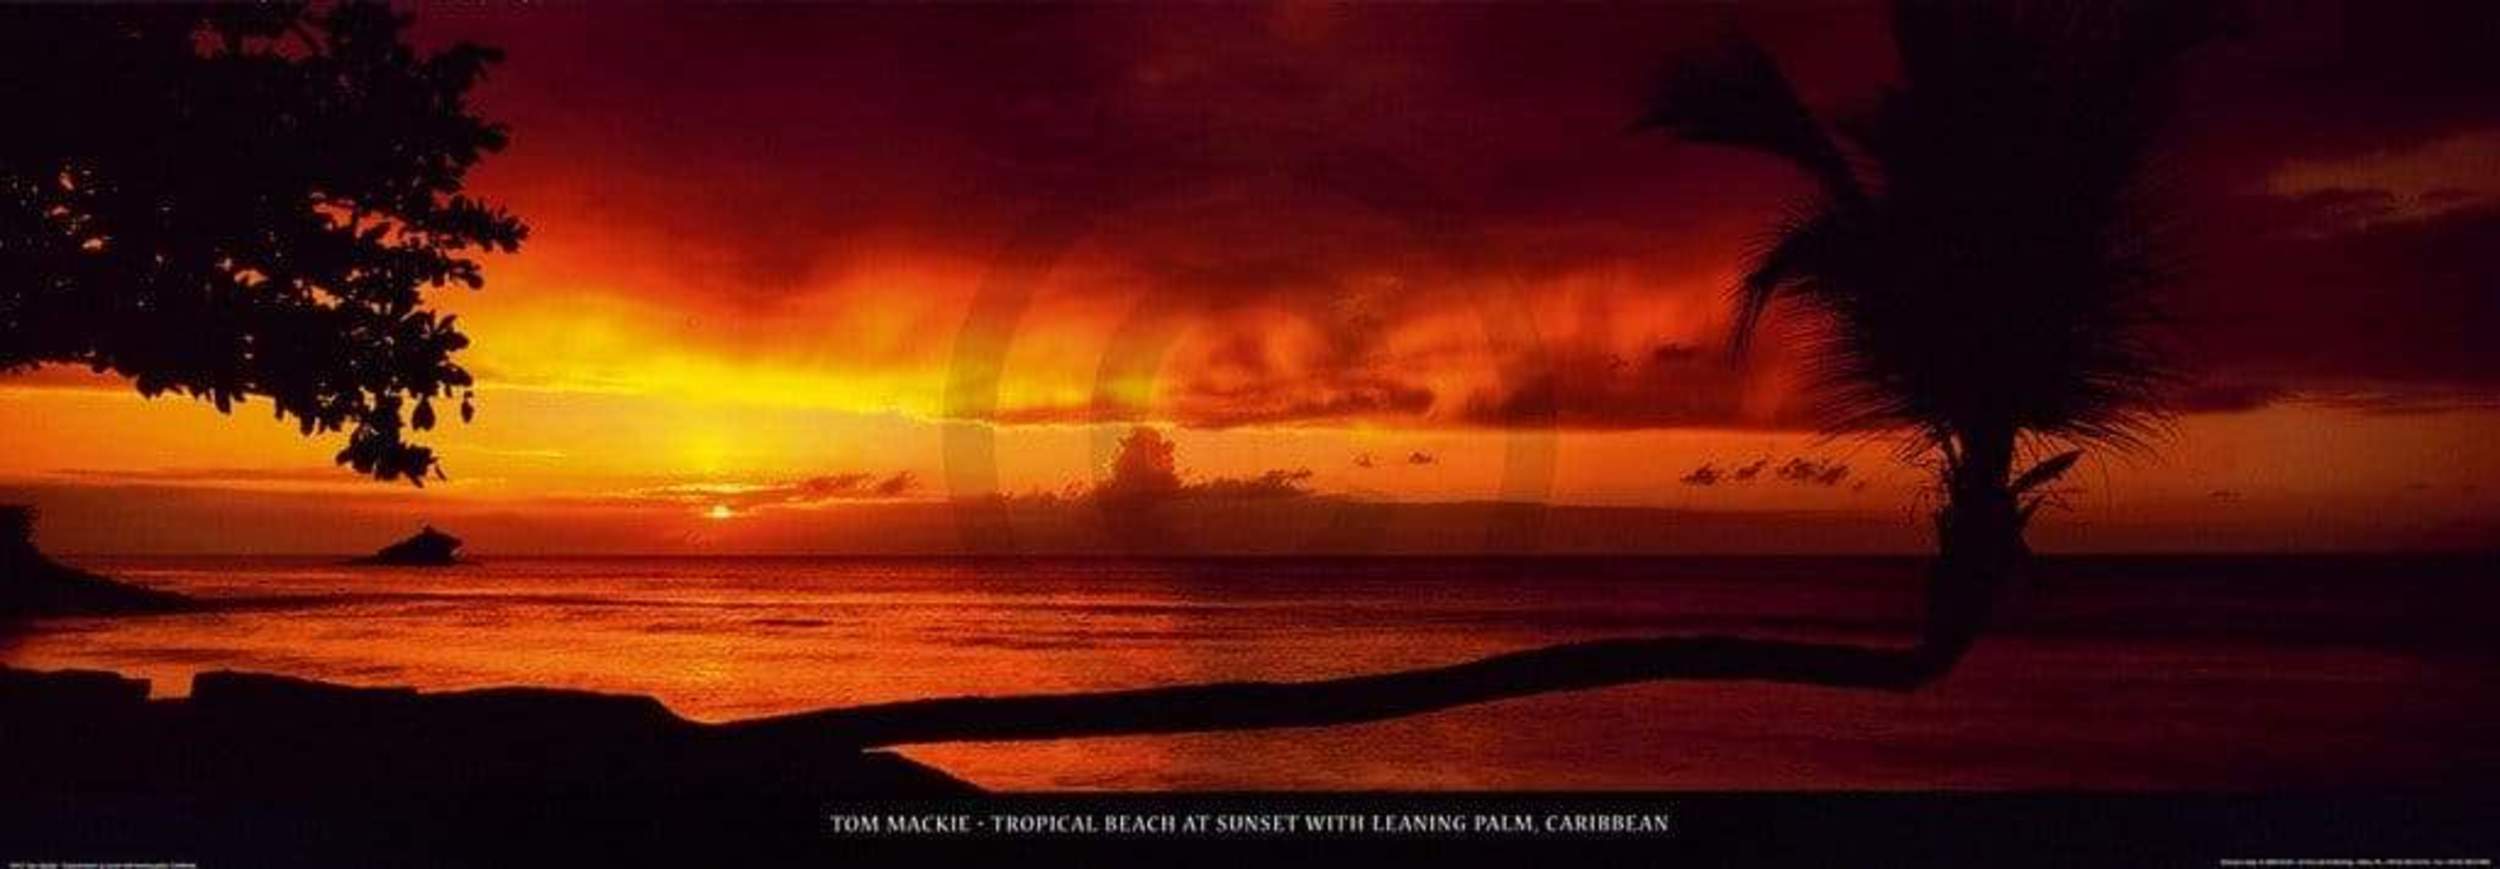 pgm kunstdruck tom mackie - tropical beach at sunset 95x33cm